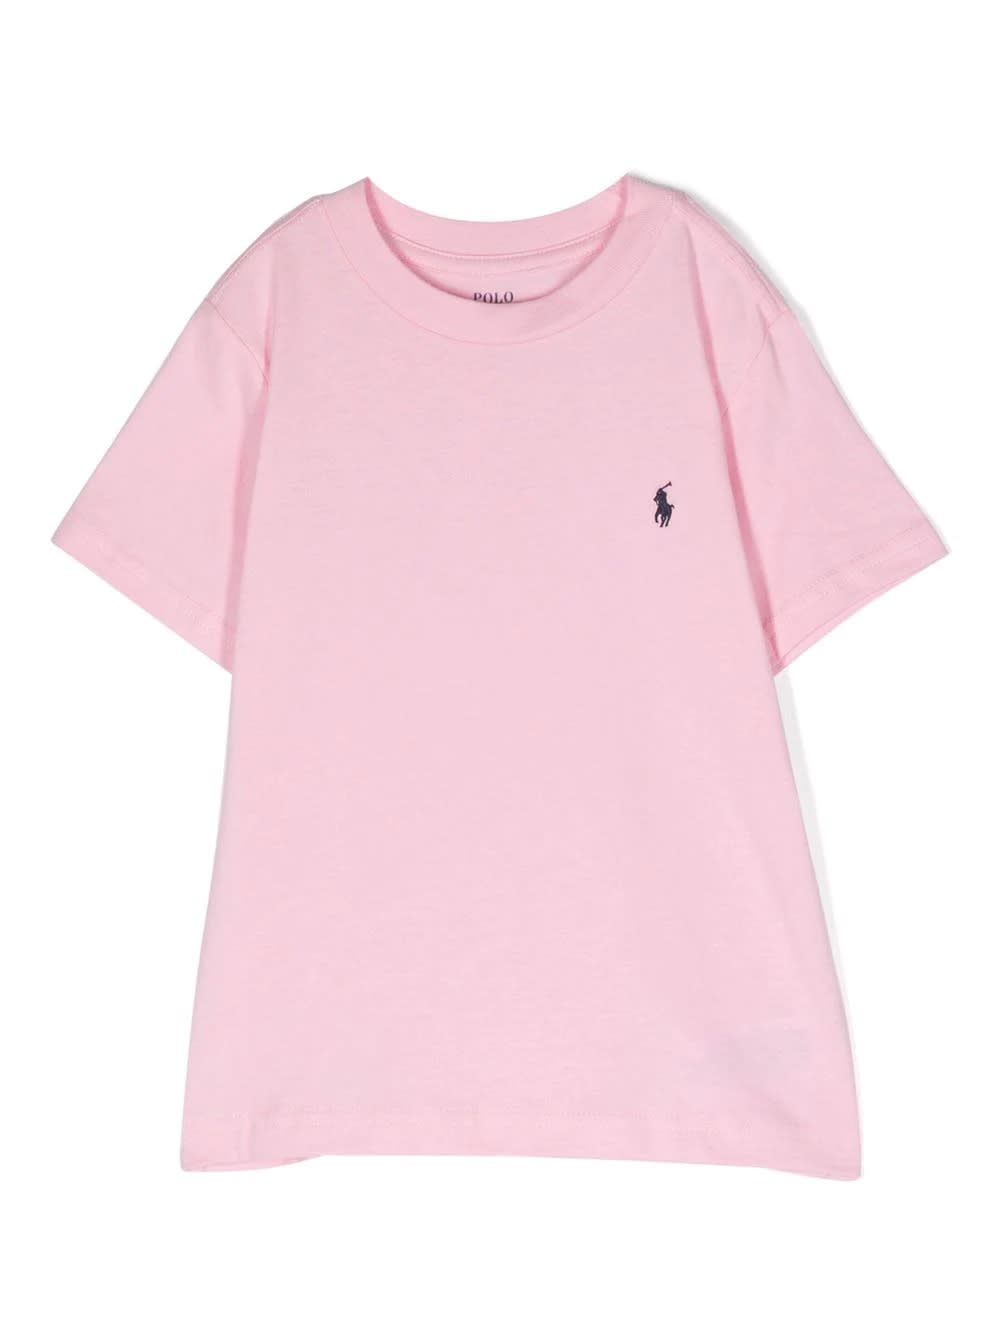 Ralph Lauren Pink T-shirt With Navy Blue Pony